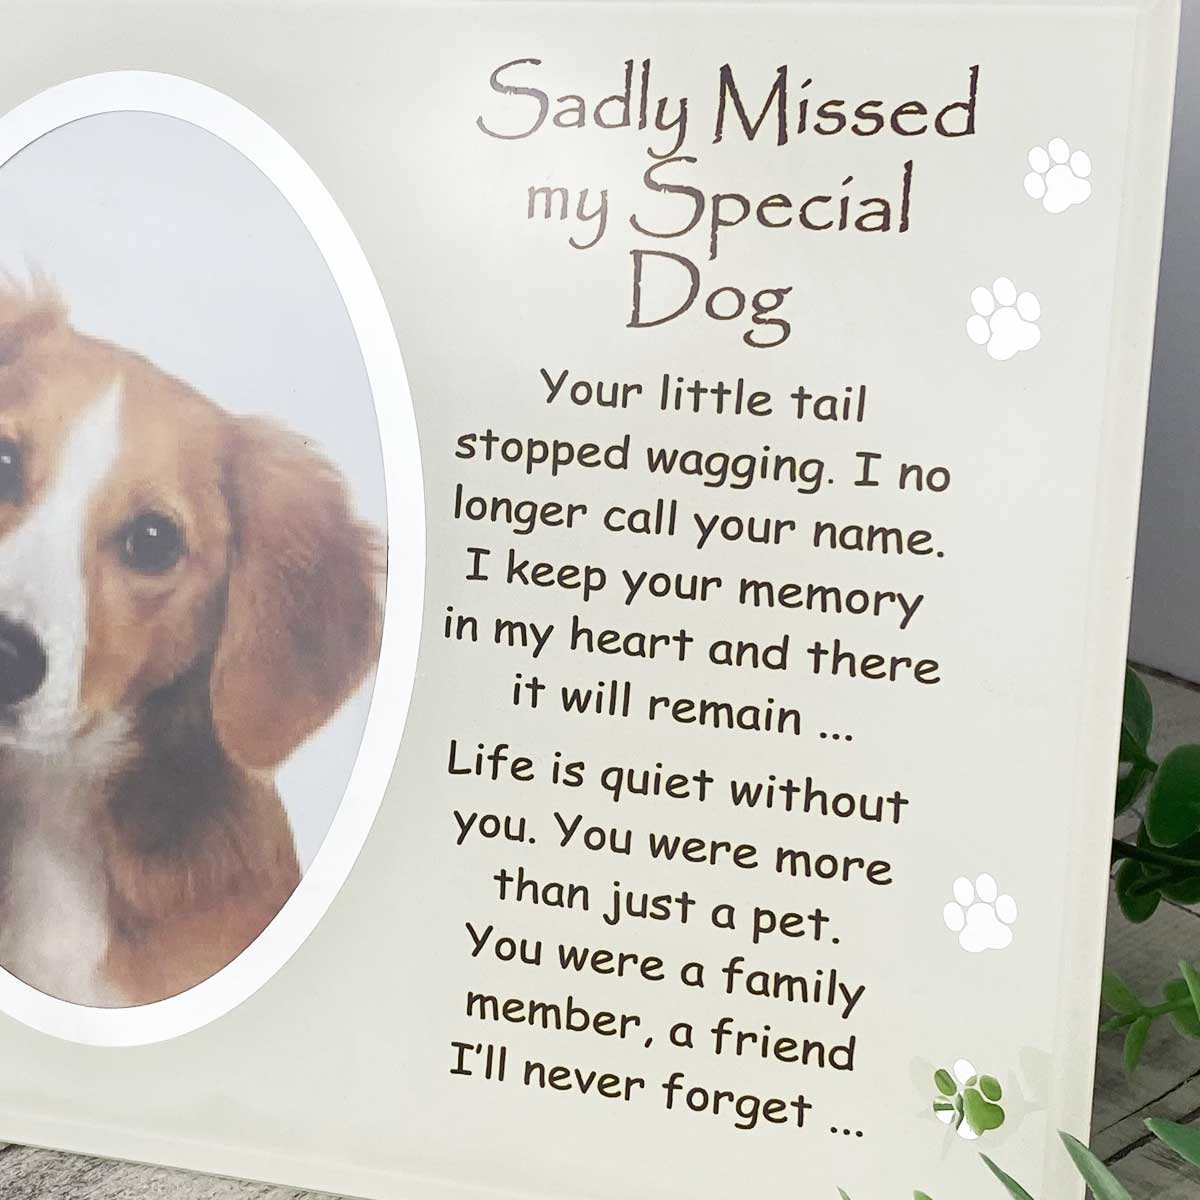 Sadly Missed my special dog memorial Glass frame